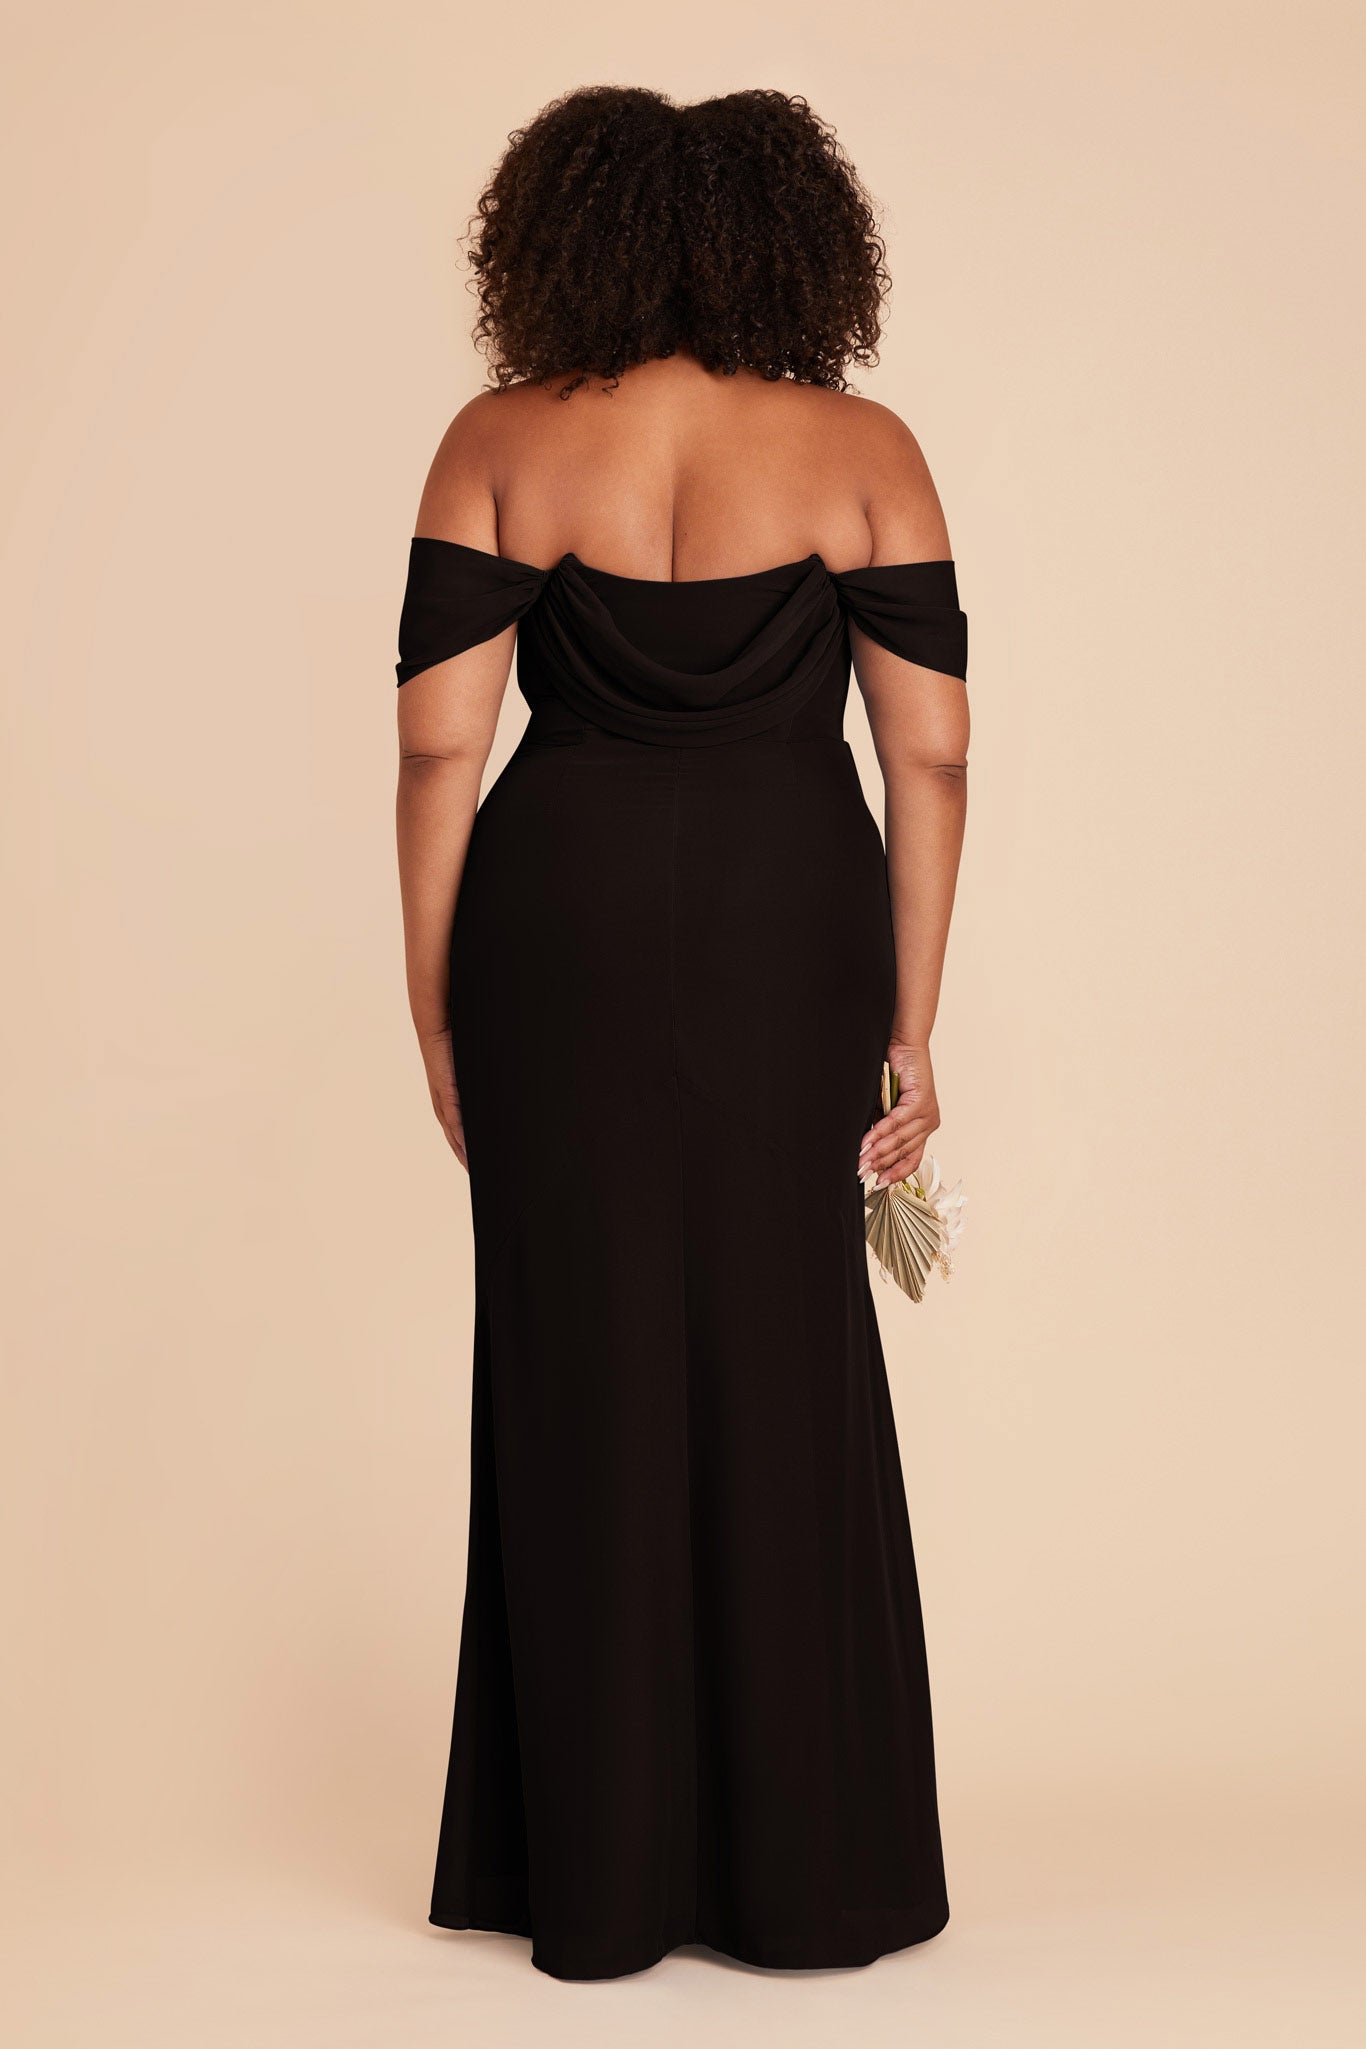 Black Mira Convertible Dress by Birdy Grey